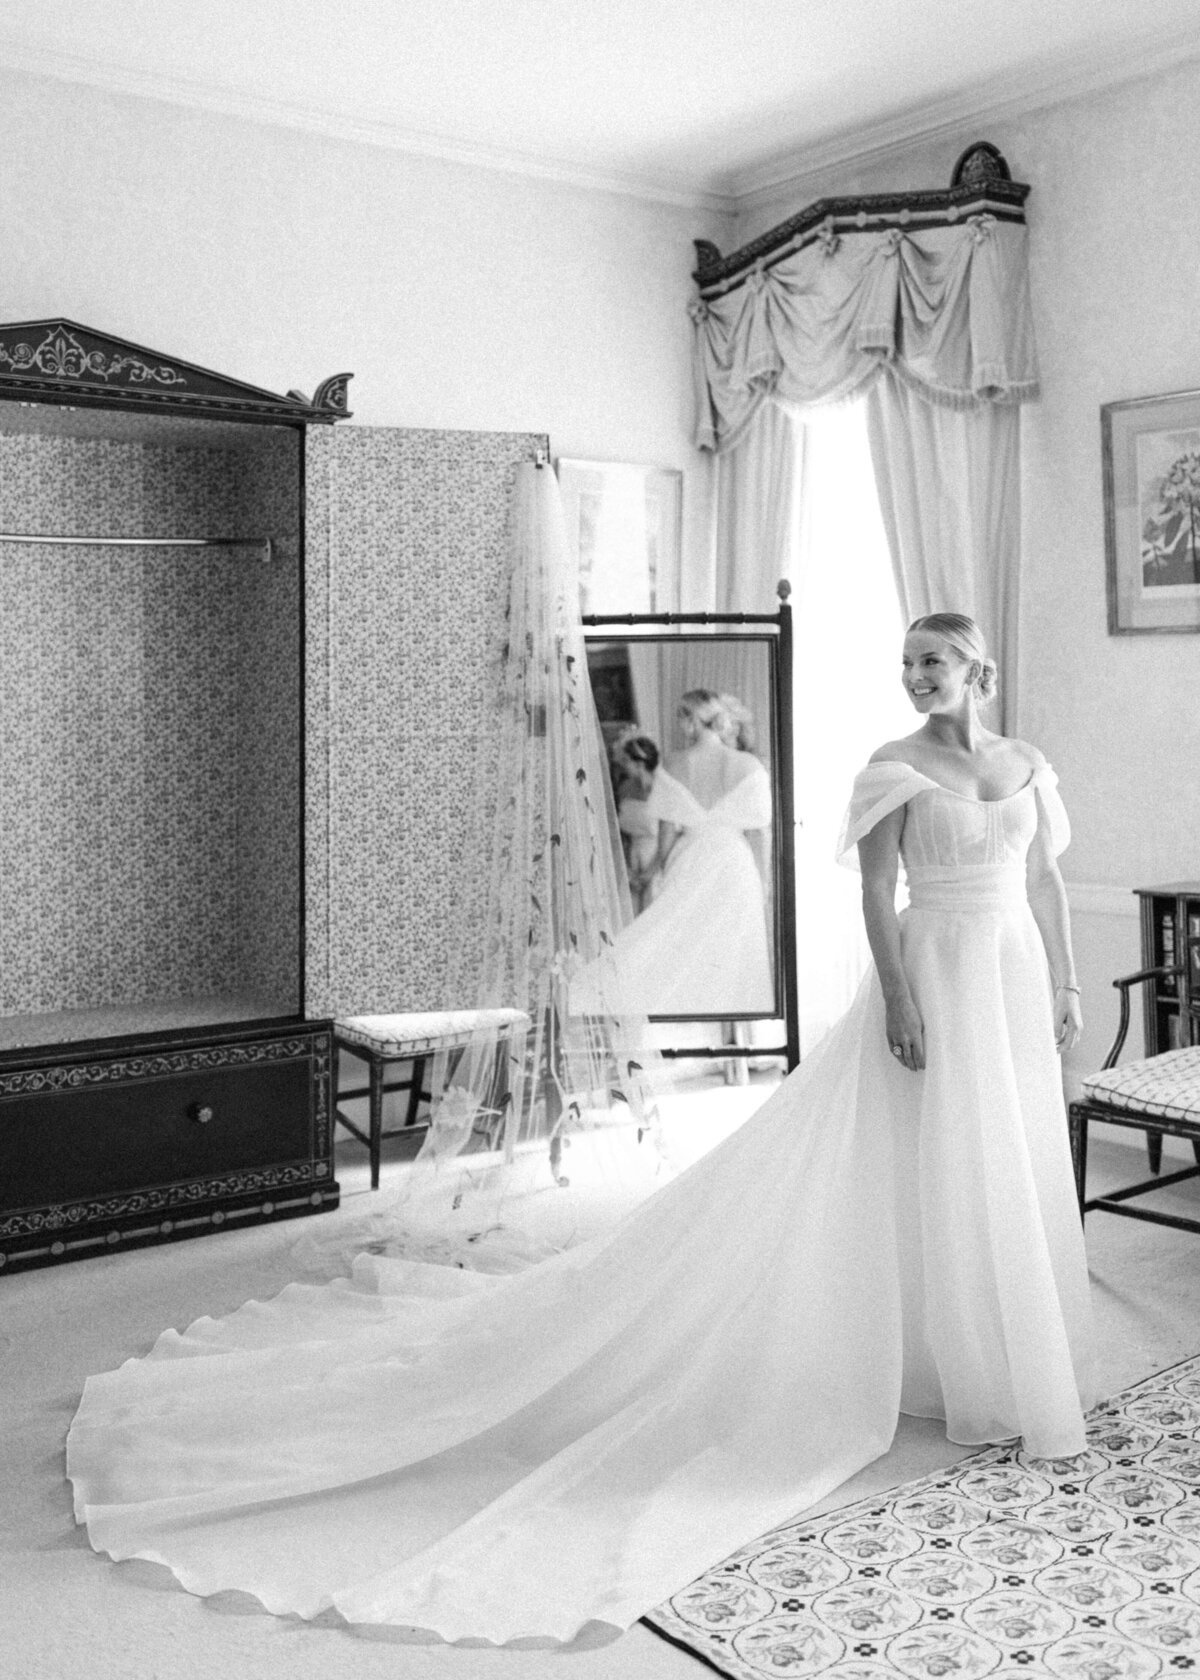 chloe-winstanley-weddings-cotswolds-cornwell-manor-monique-lhuillier-dress-portrait-black-white